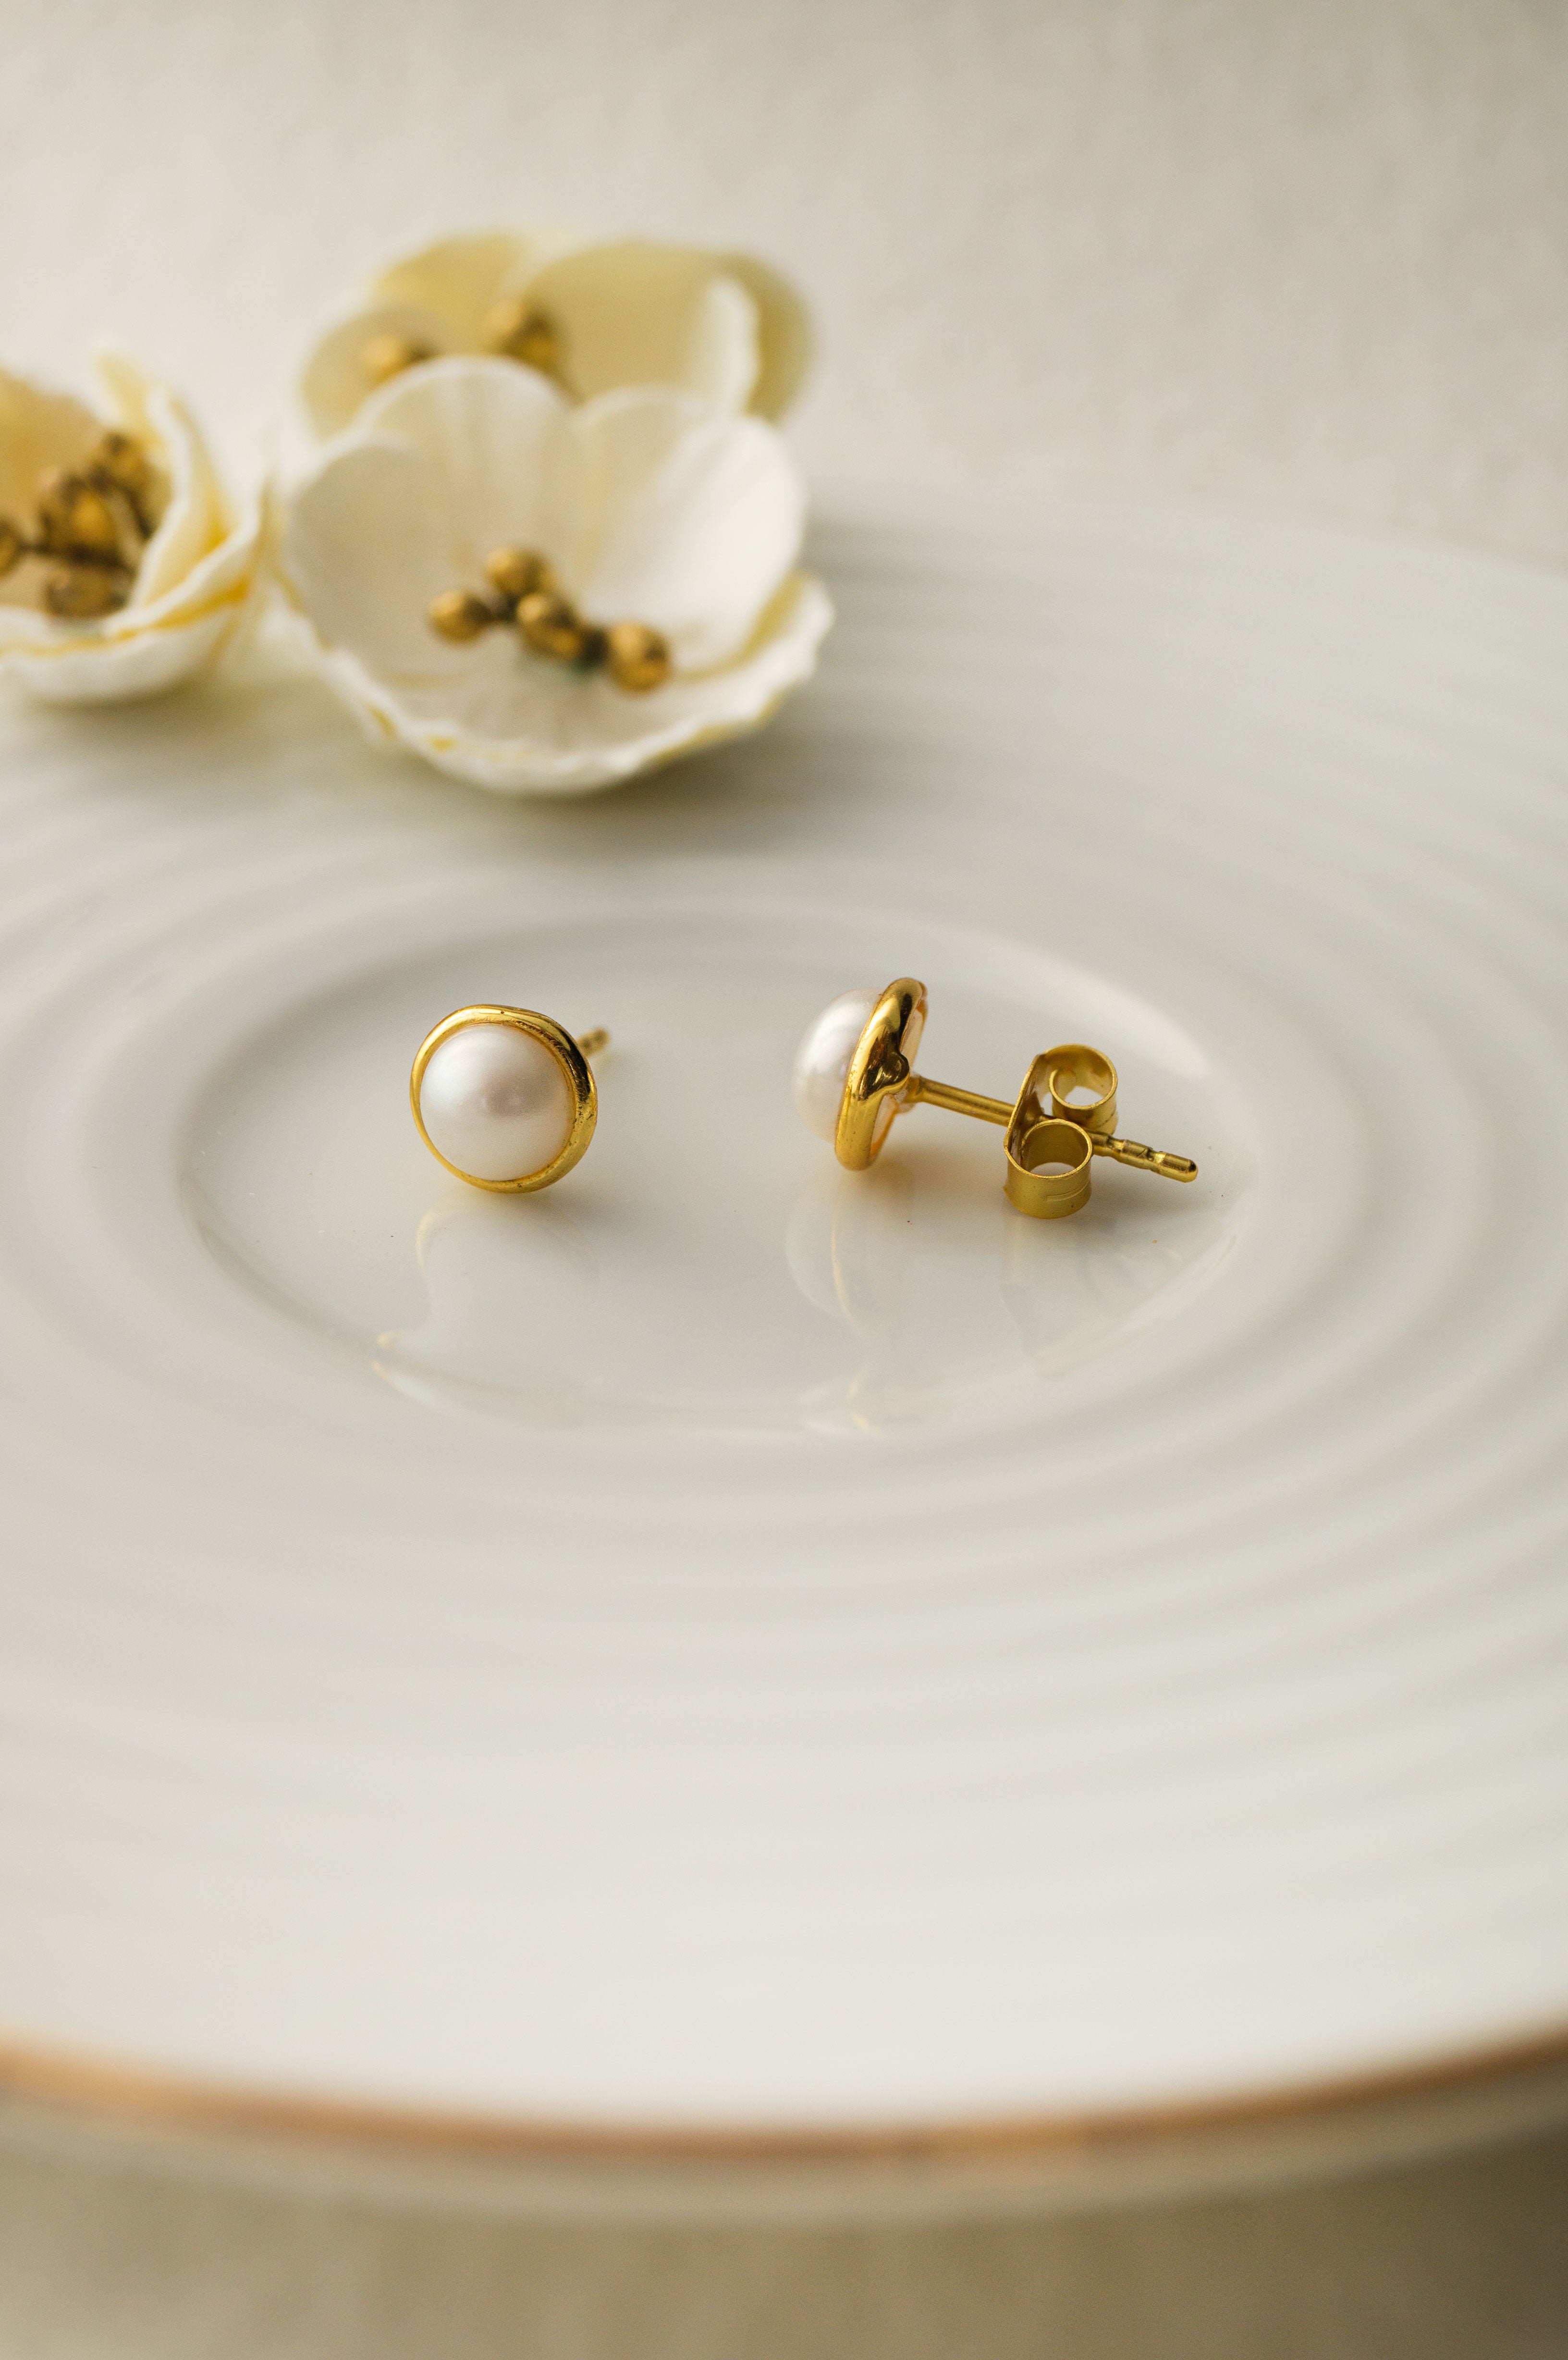 5mm Cultured Freshwater Pearl Stud Earrings in 10K Gold | Banter